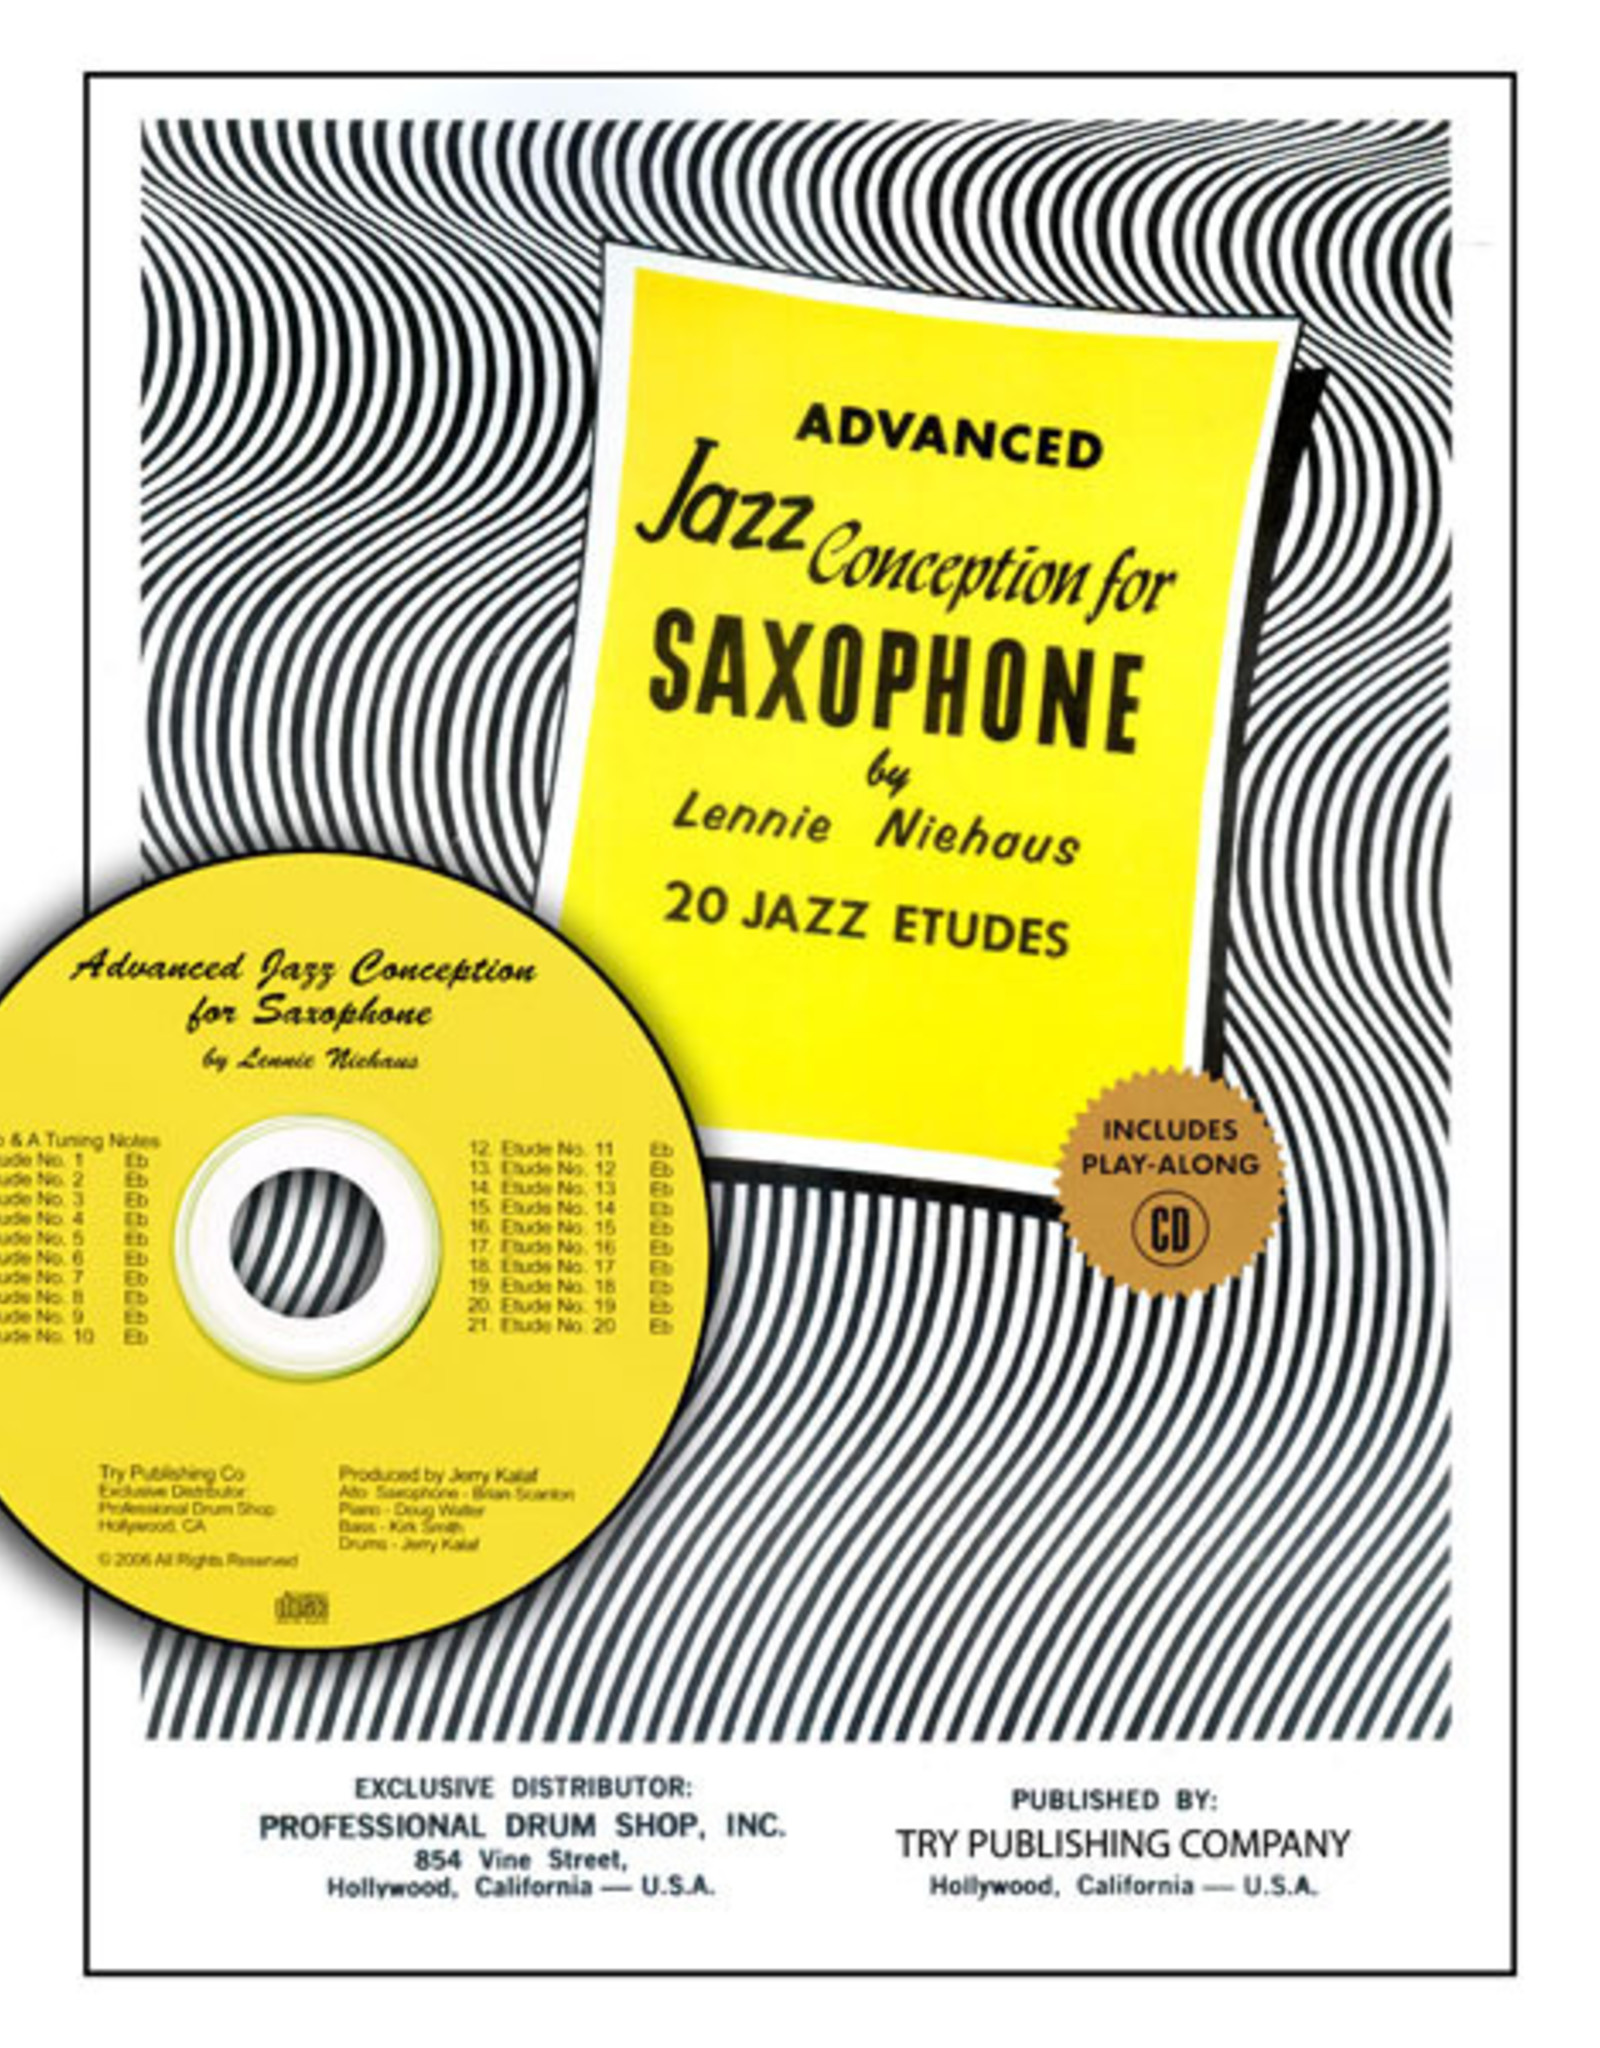 Professional Drum Shop Advanced Jazz Conception for Saxophone by Lennie Niehaus